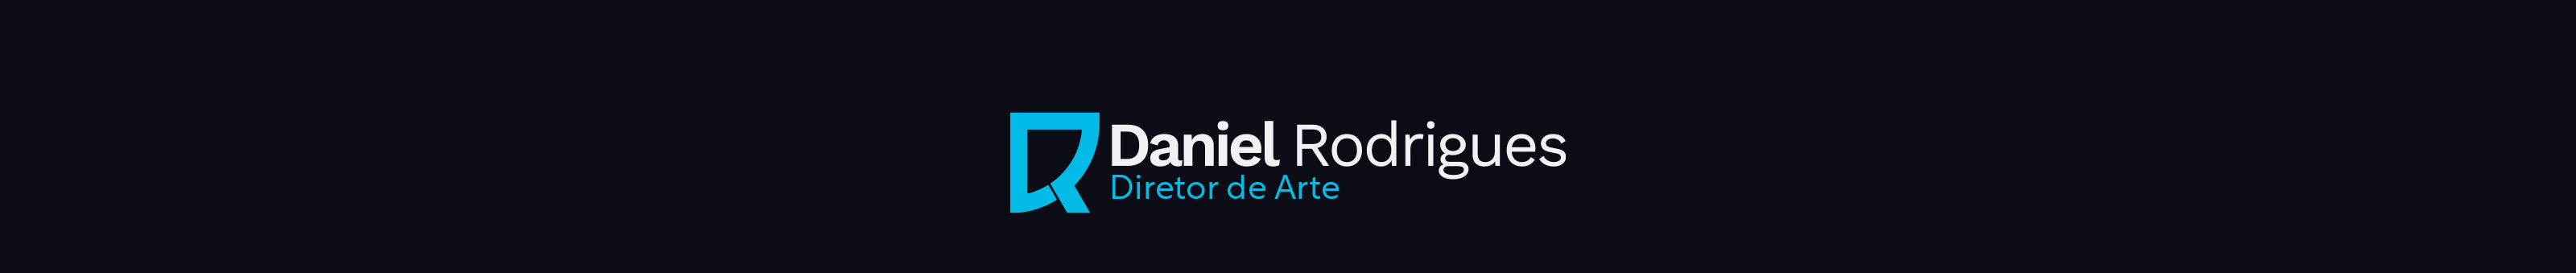 Daniel Rodrigues ✪s profilbanner